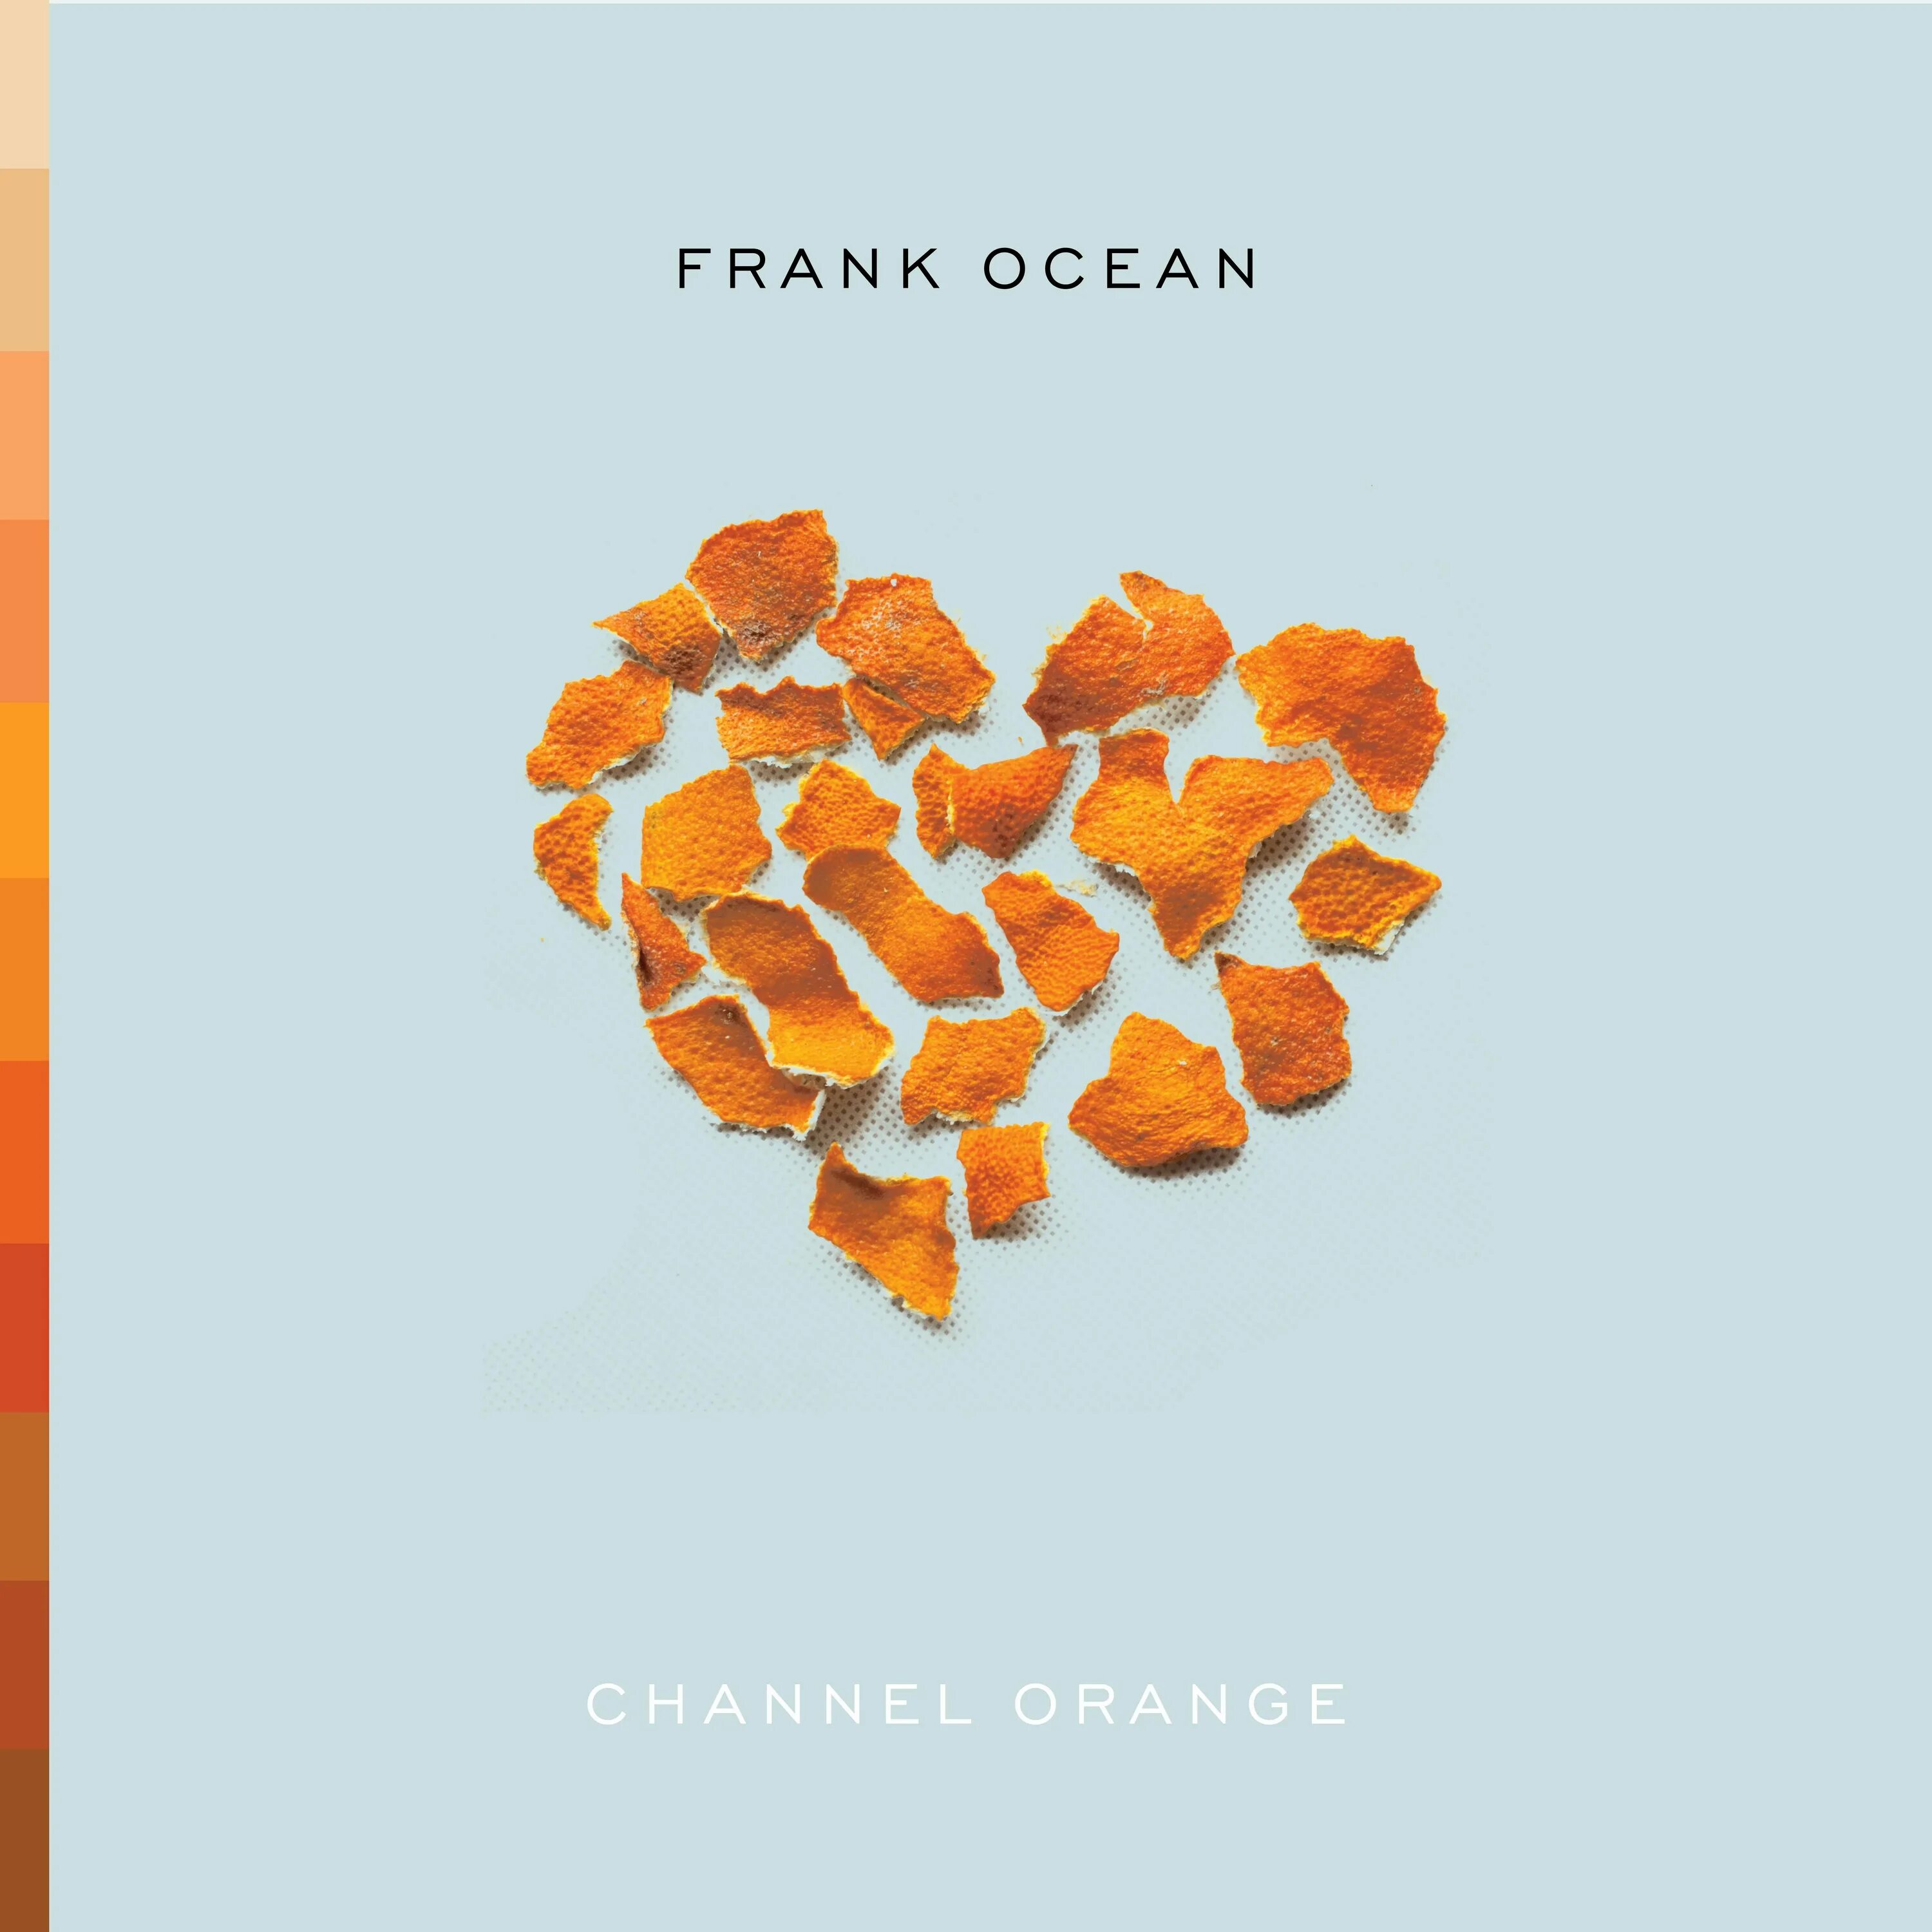 Channel Orange Фрэнк оушен. Frank Ocean channel Orange Art. Frank Ocean обложка. Channel Orange обложка. Ocean channel